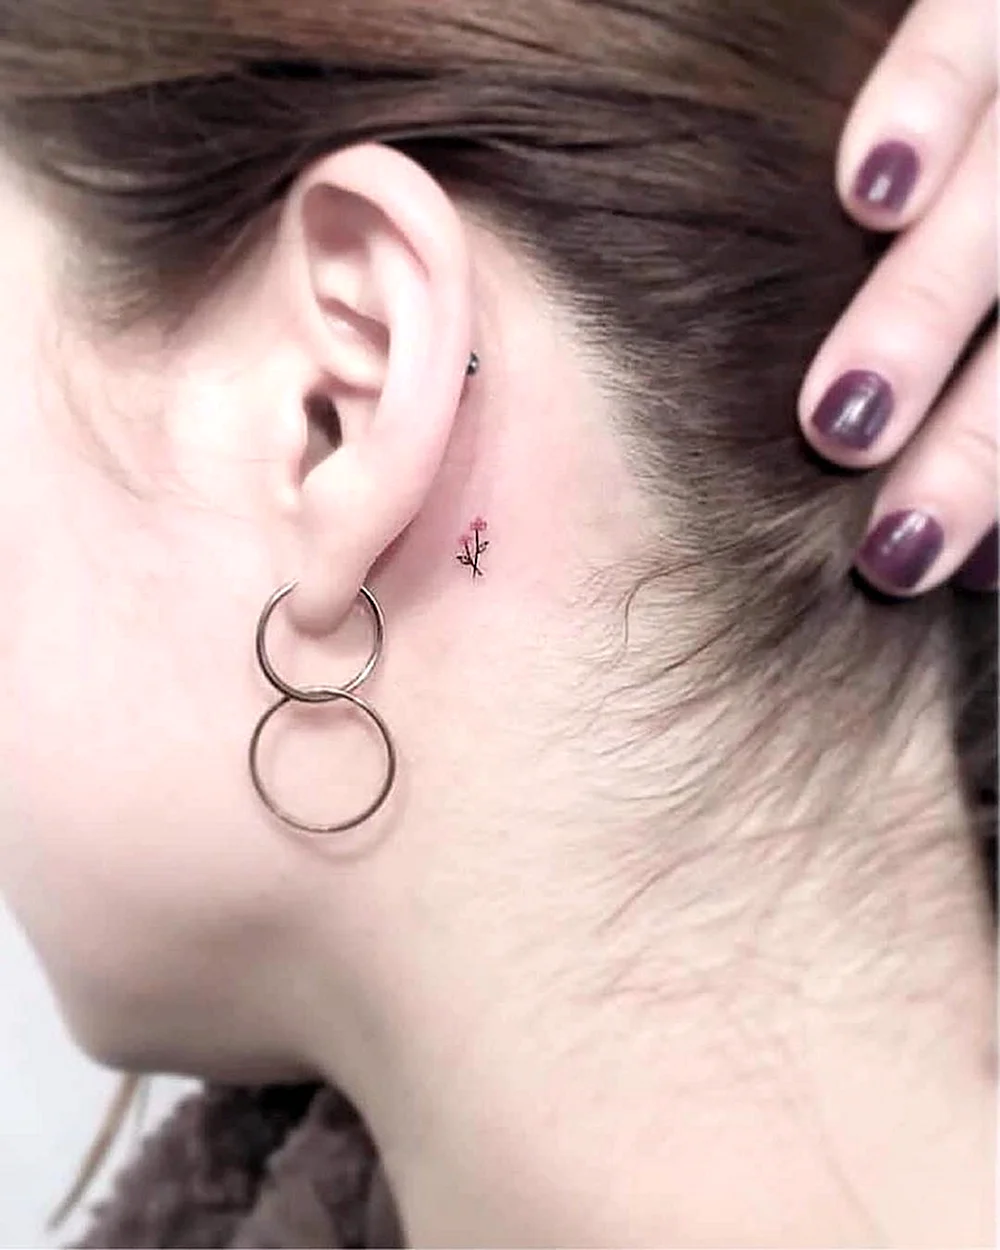 Tattoo inside the womans Ear